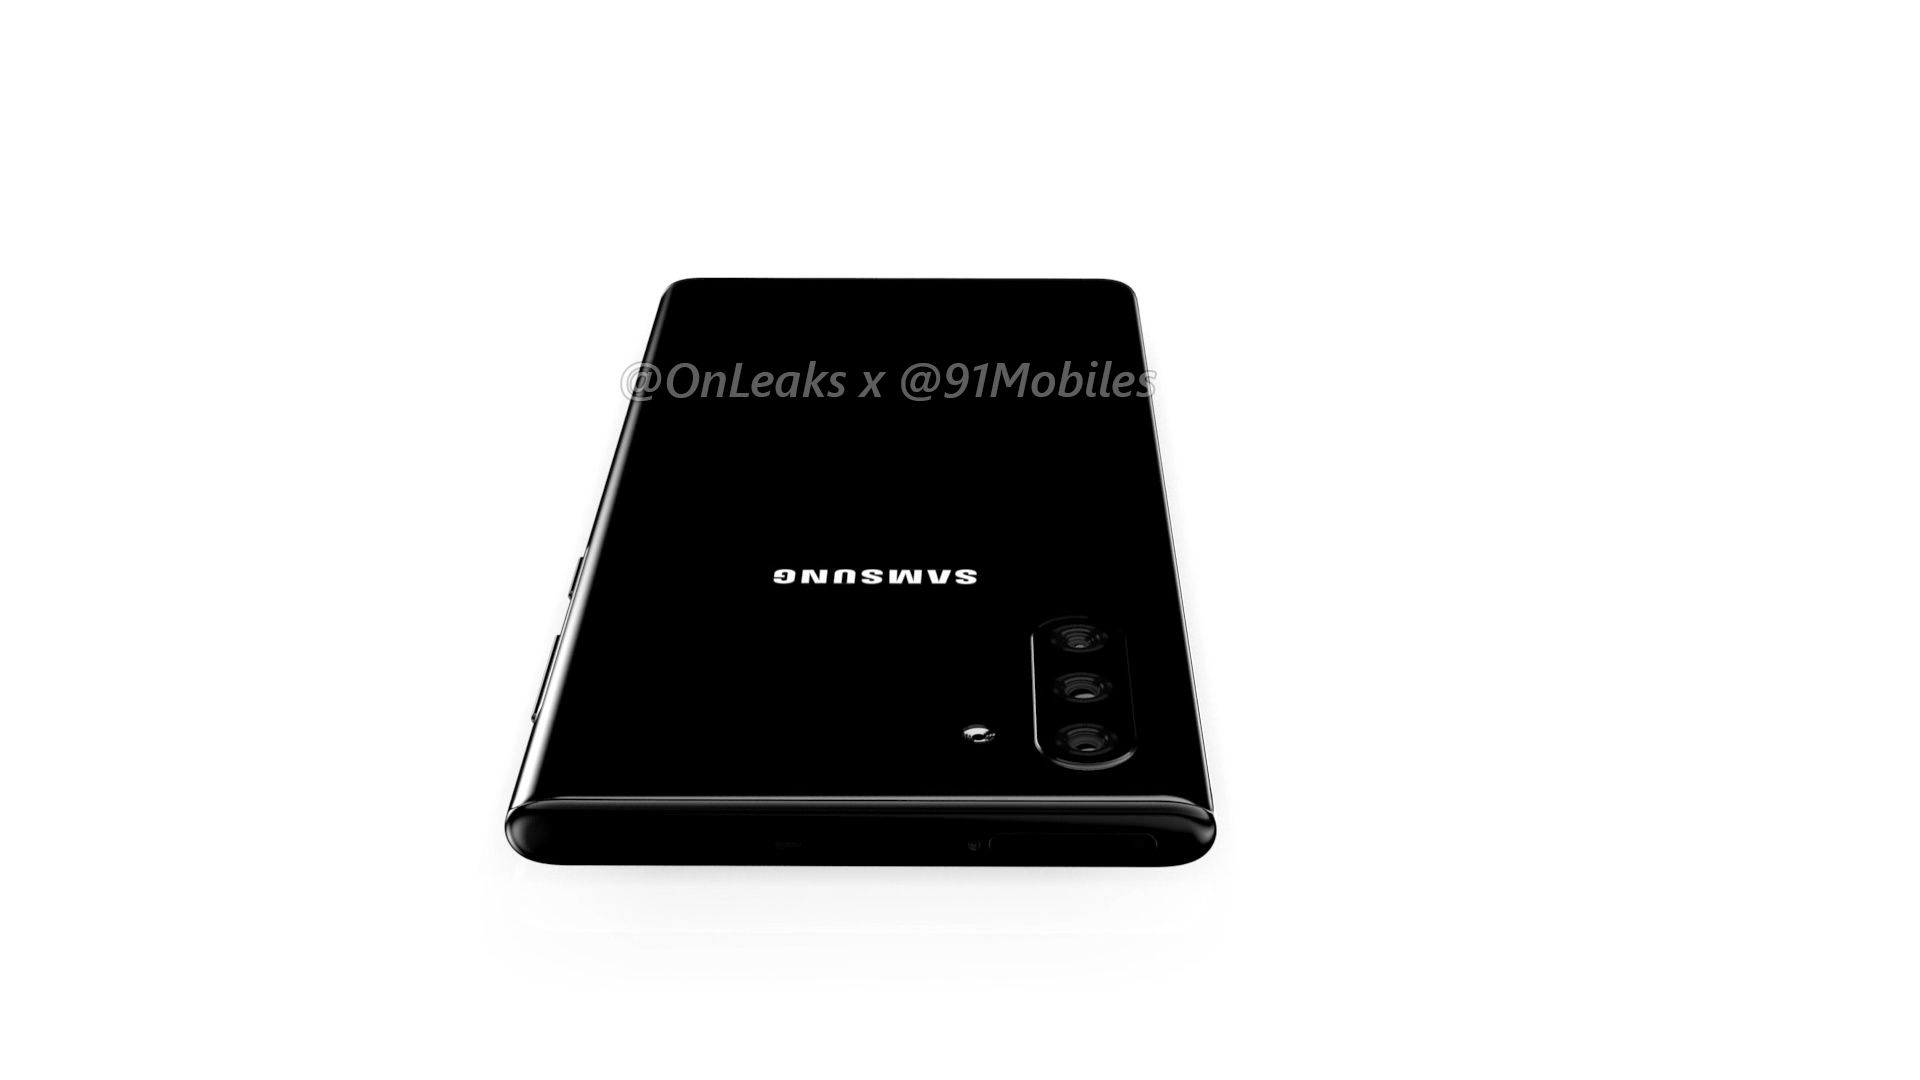 Samsung Galaxy Note 10 onleaks 91mobiles (11)